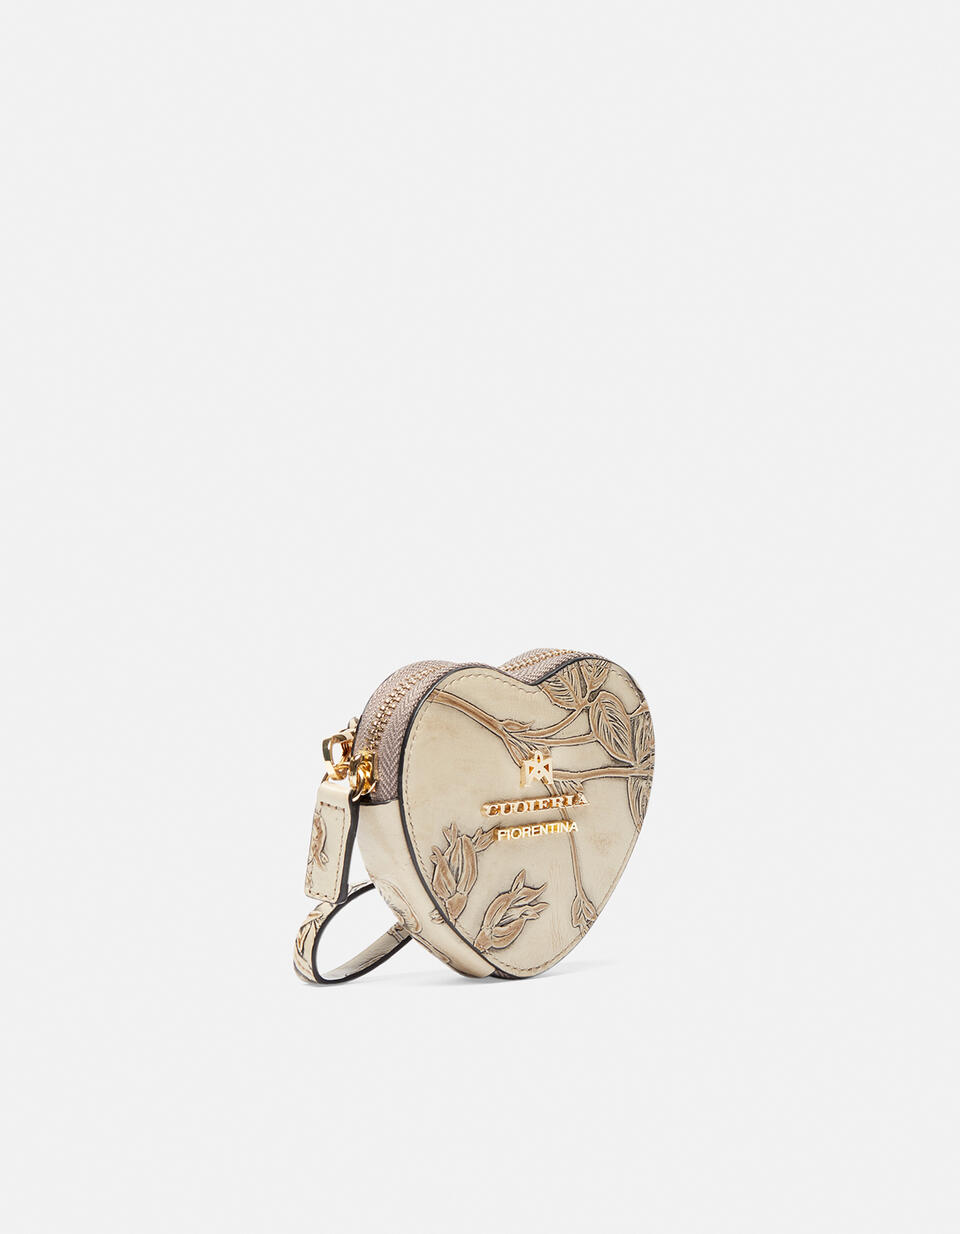 Heart purse - Women's Accessories | Accessories Mimì TAUPE - Women's Accessories | AccessoriesCuoieria Fiorentina